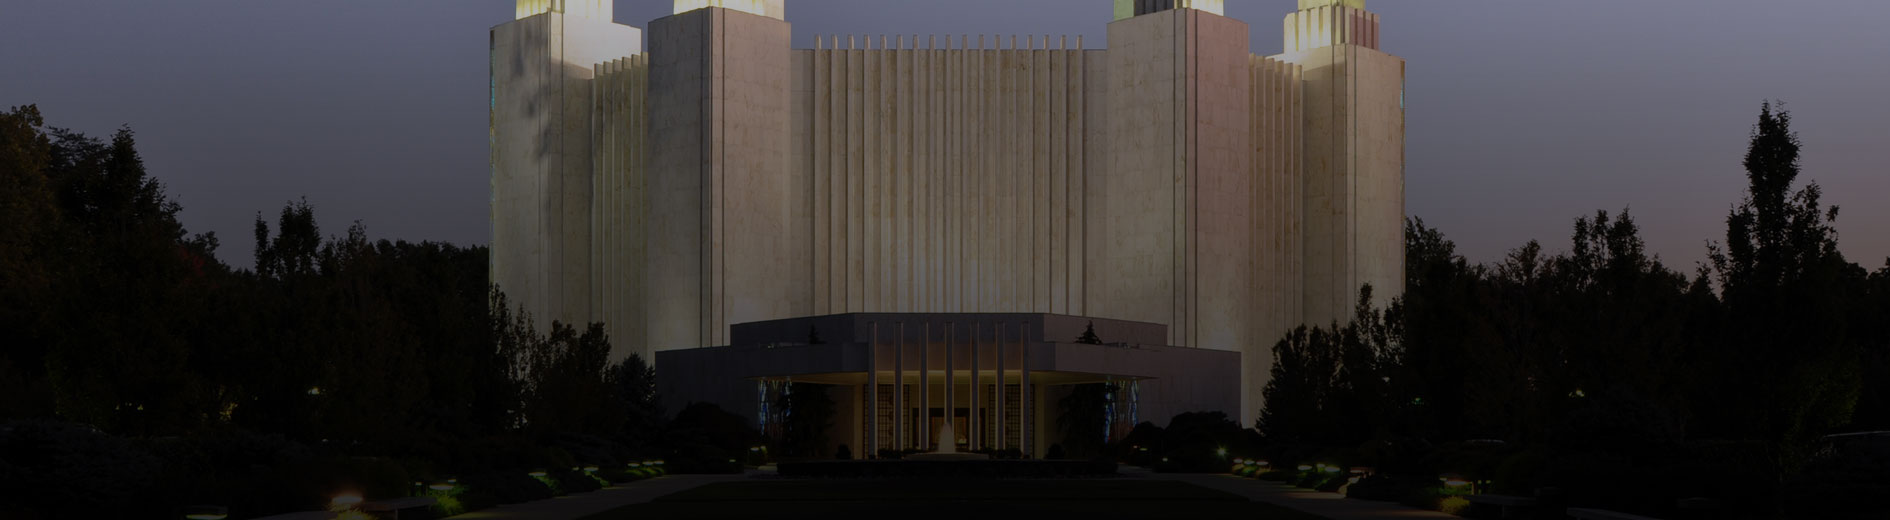 The Washington DC Temple